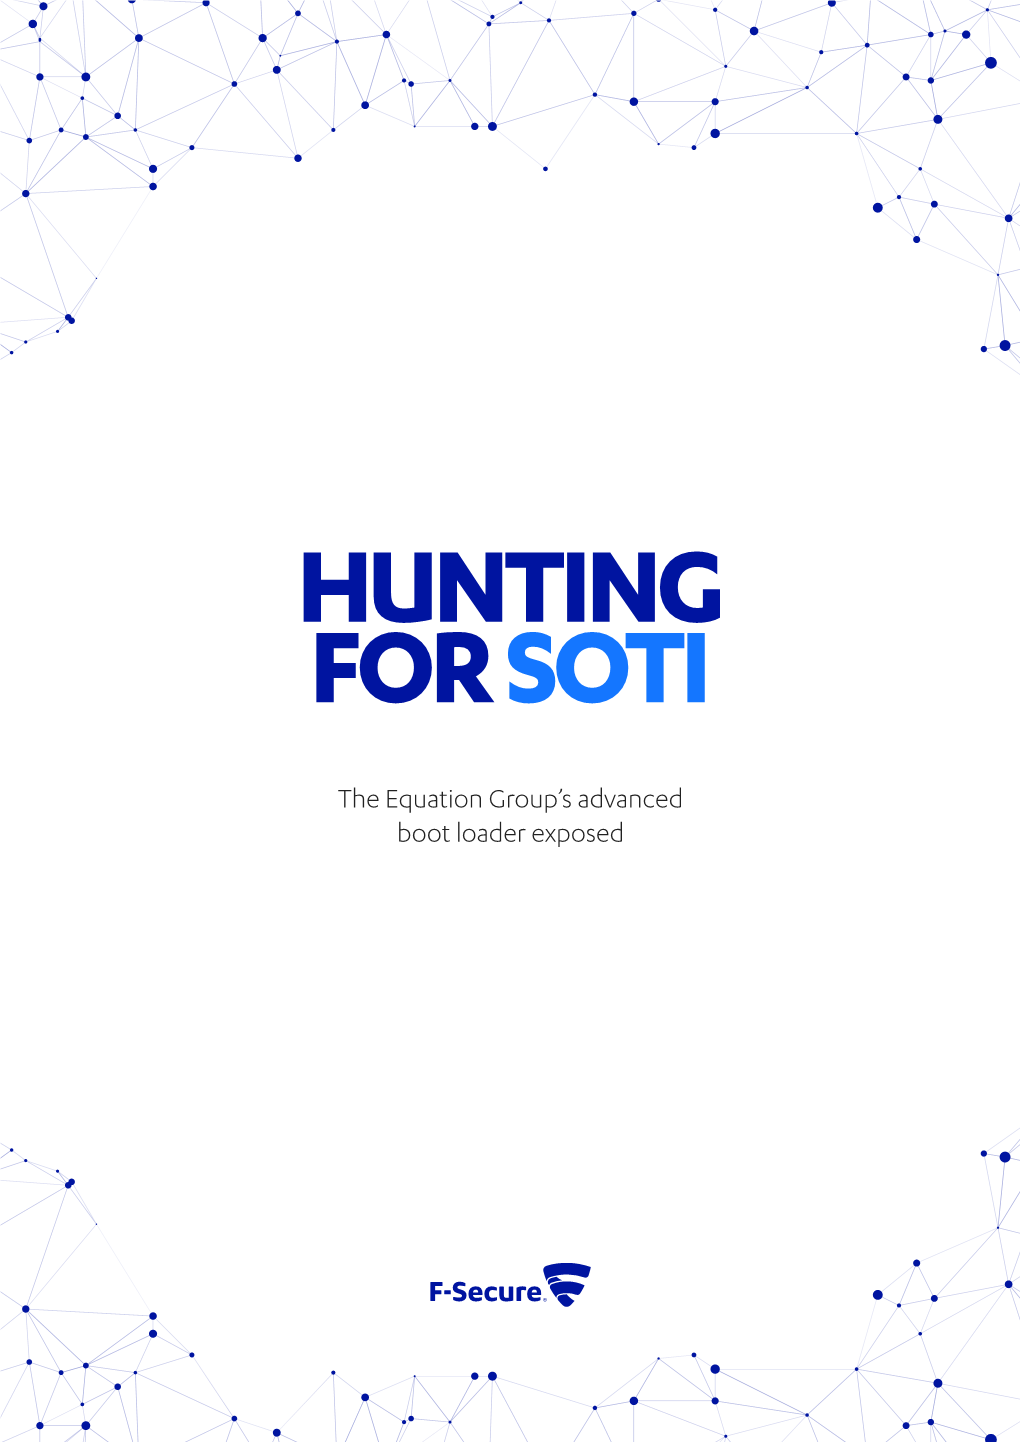 Hunting for Soti